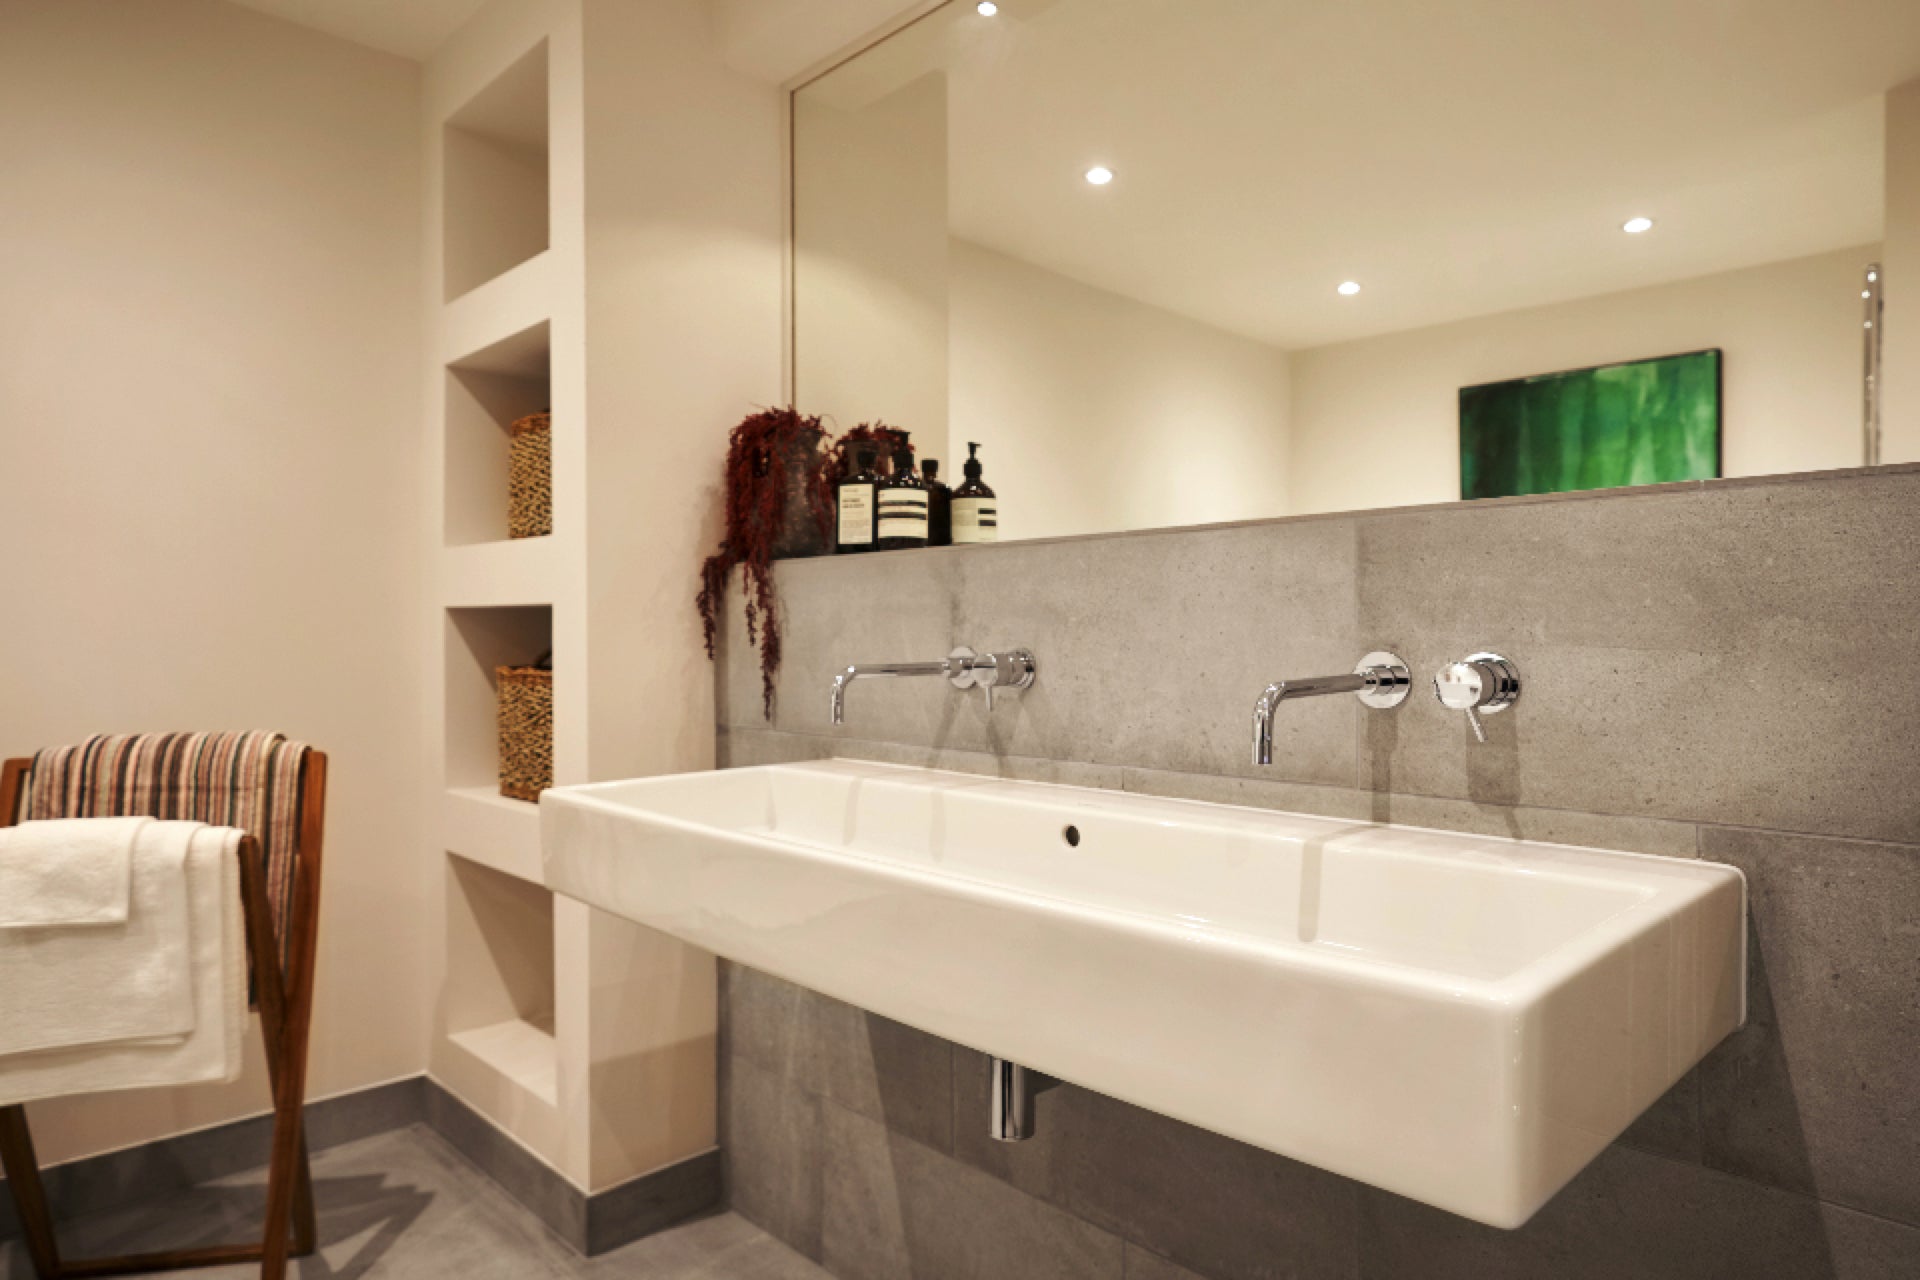 Sinks in bathroom of luxury Cotswolds House